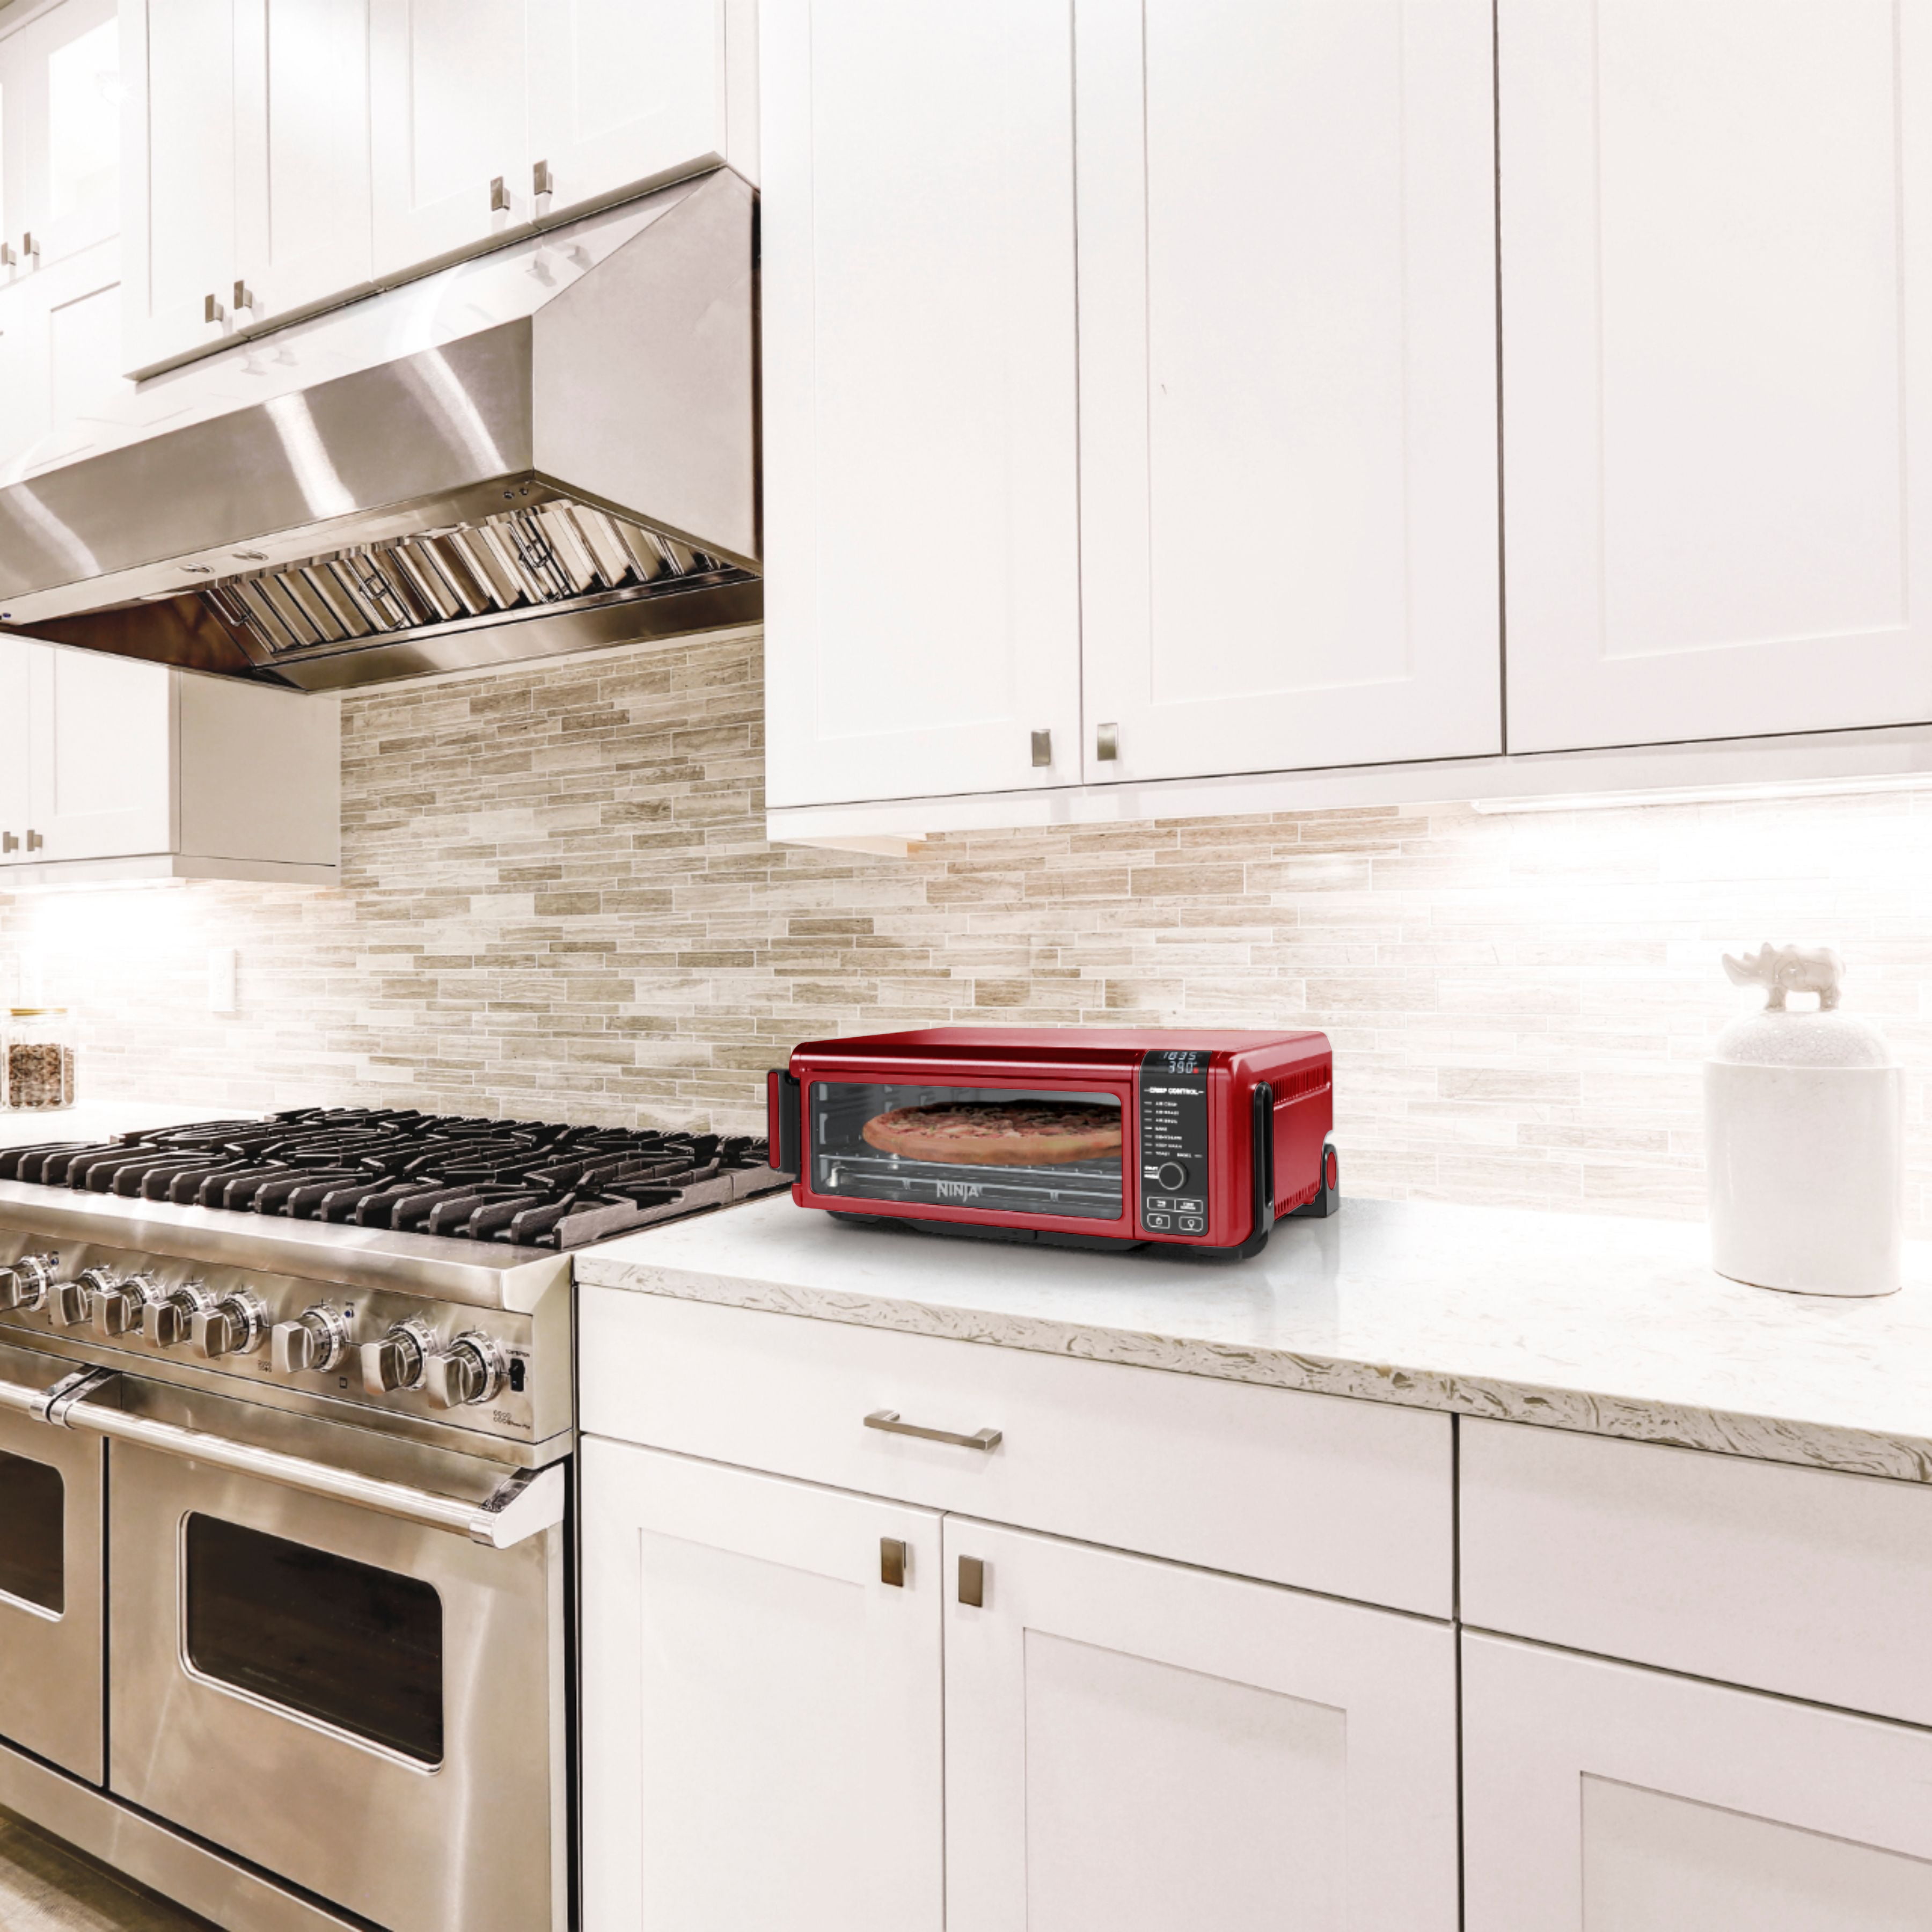 Ninja SP101 Foodi 8-in-1 Digital Air Fry, Large Toaster Oven Keep Warm-RED